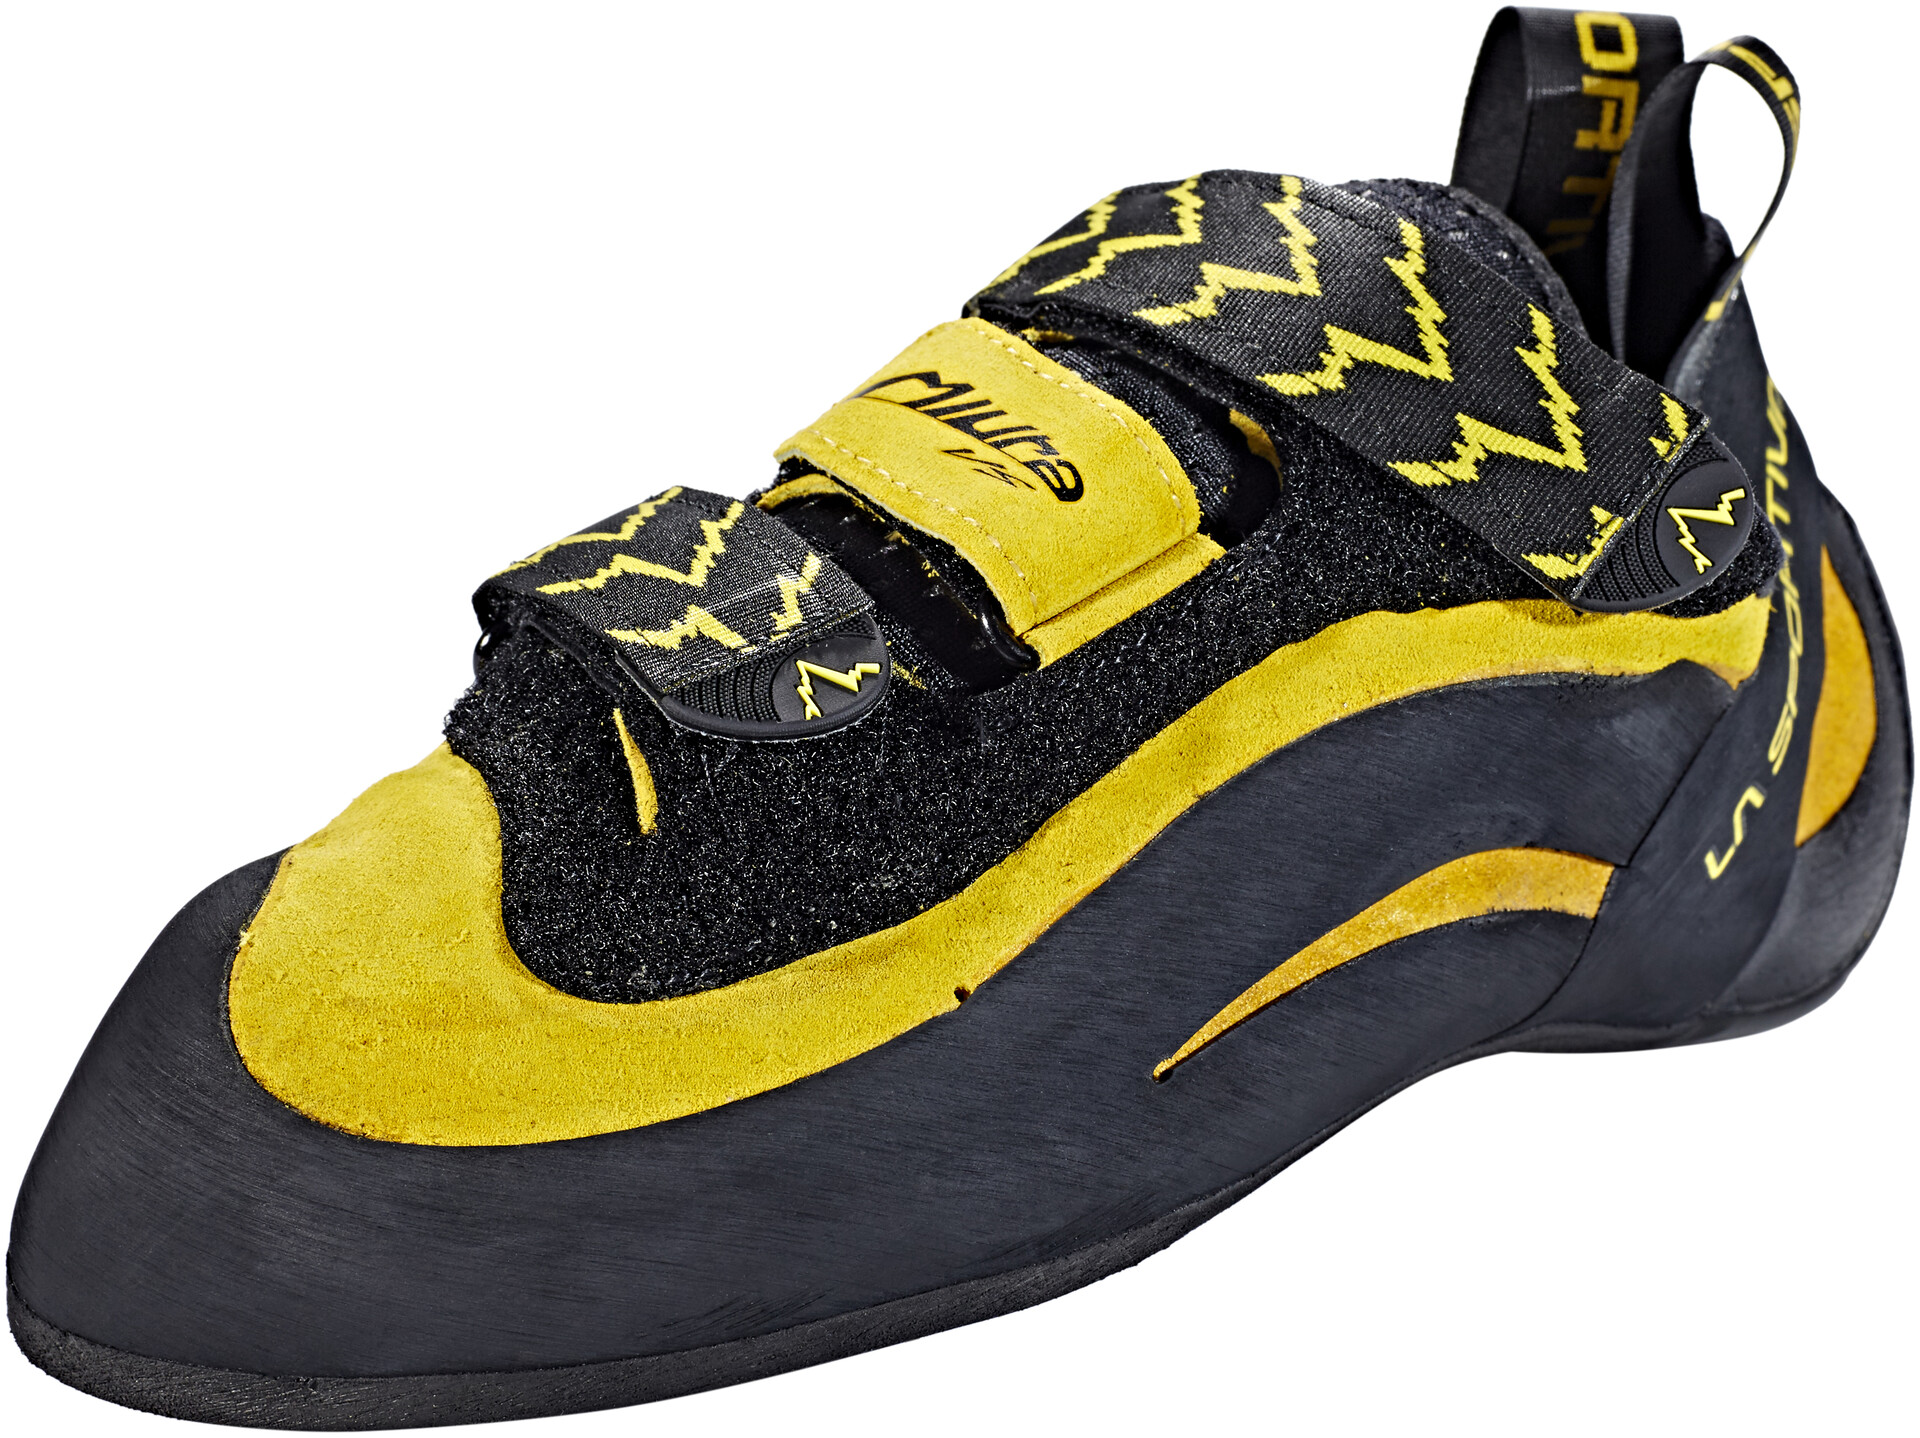 miura rock climbing shoes